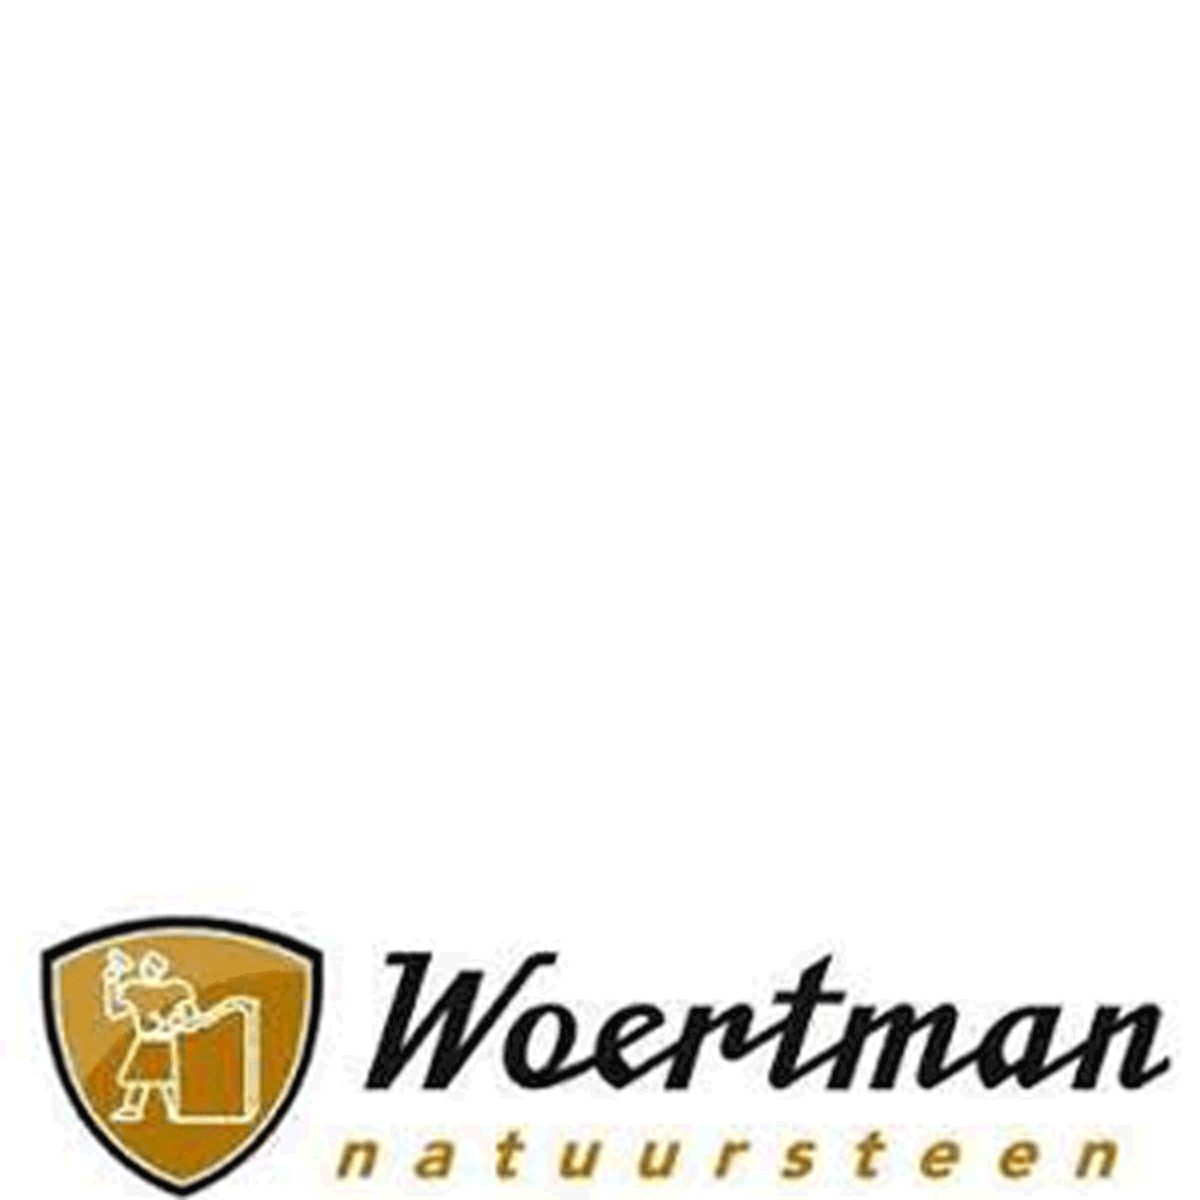 Woertman